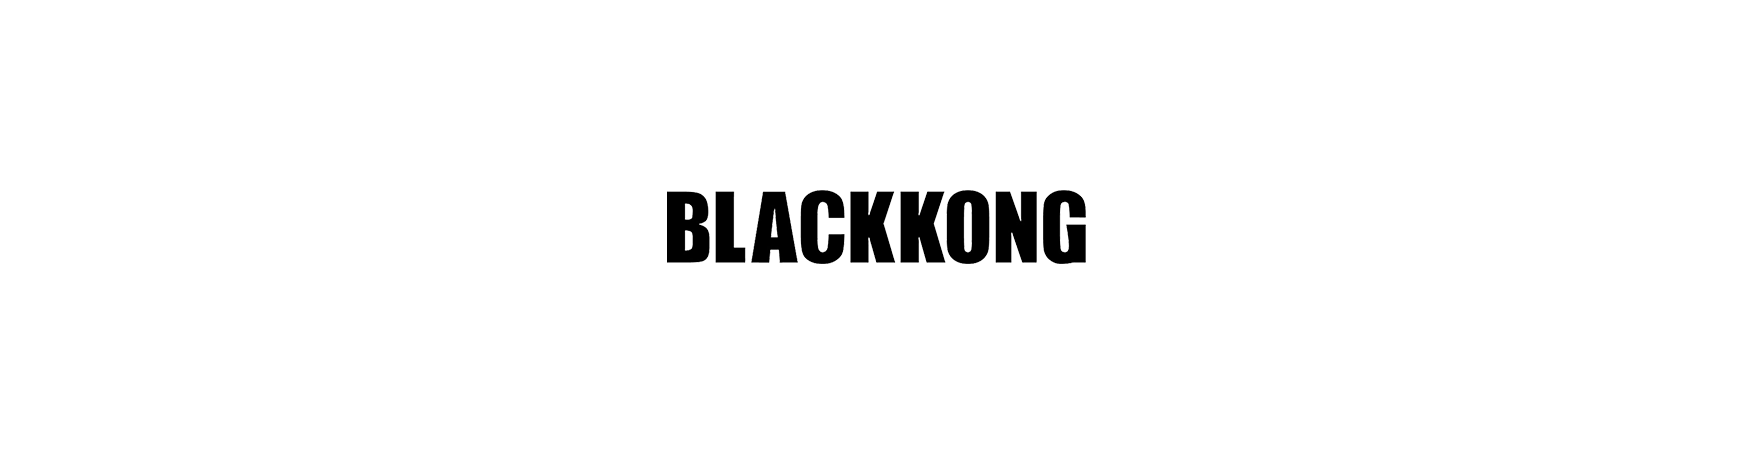 BlackKong